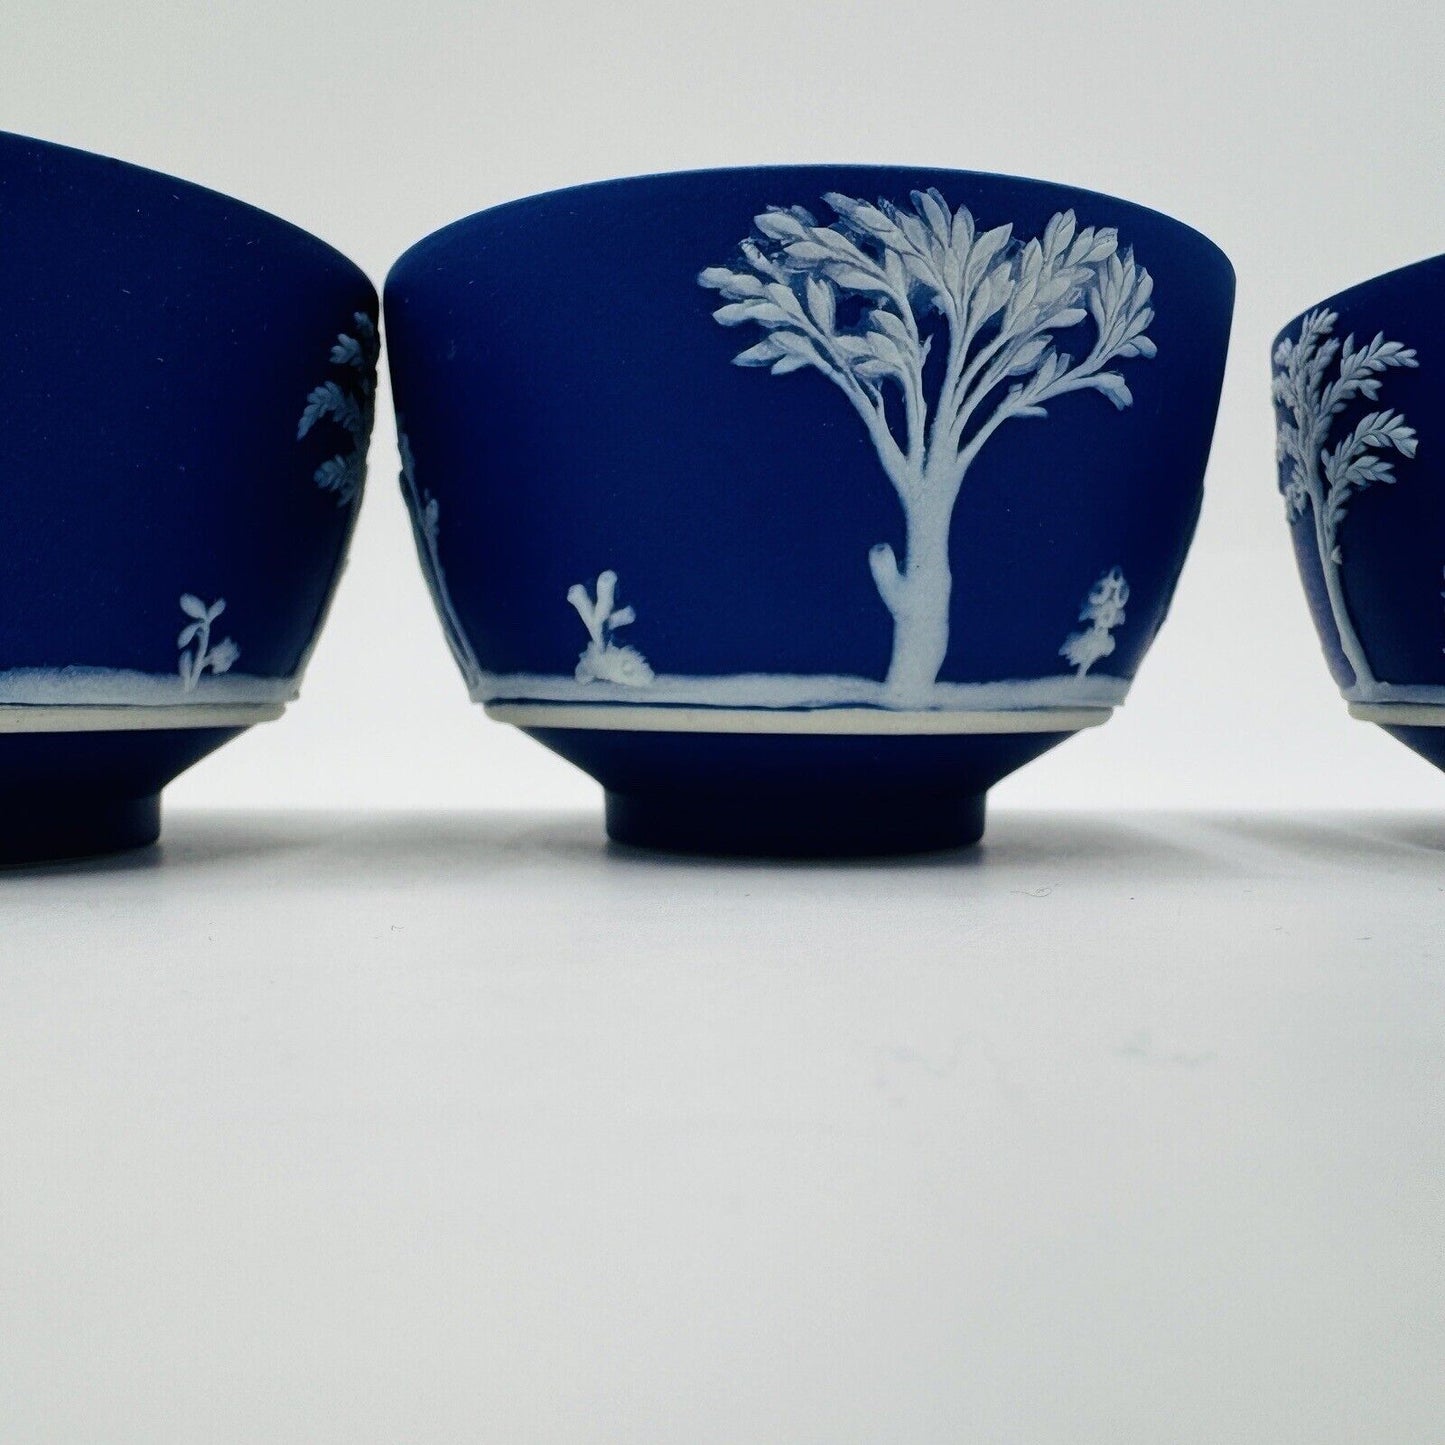 c.1930 Wedgwood Jasperware Dipped Dark Blue 2” X 3.4” Footed Bowls 4 Pieces